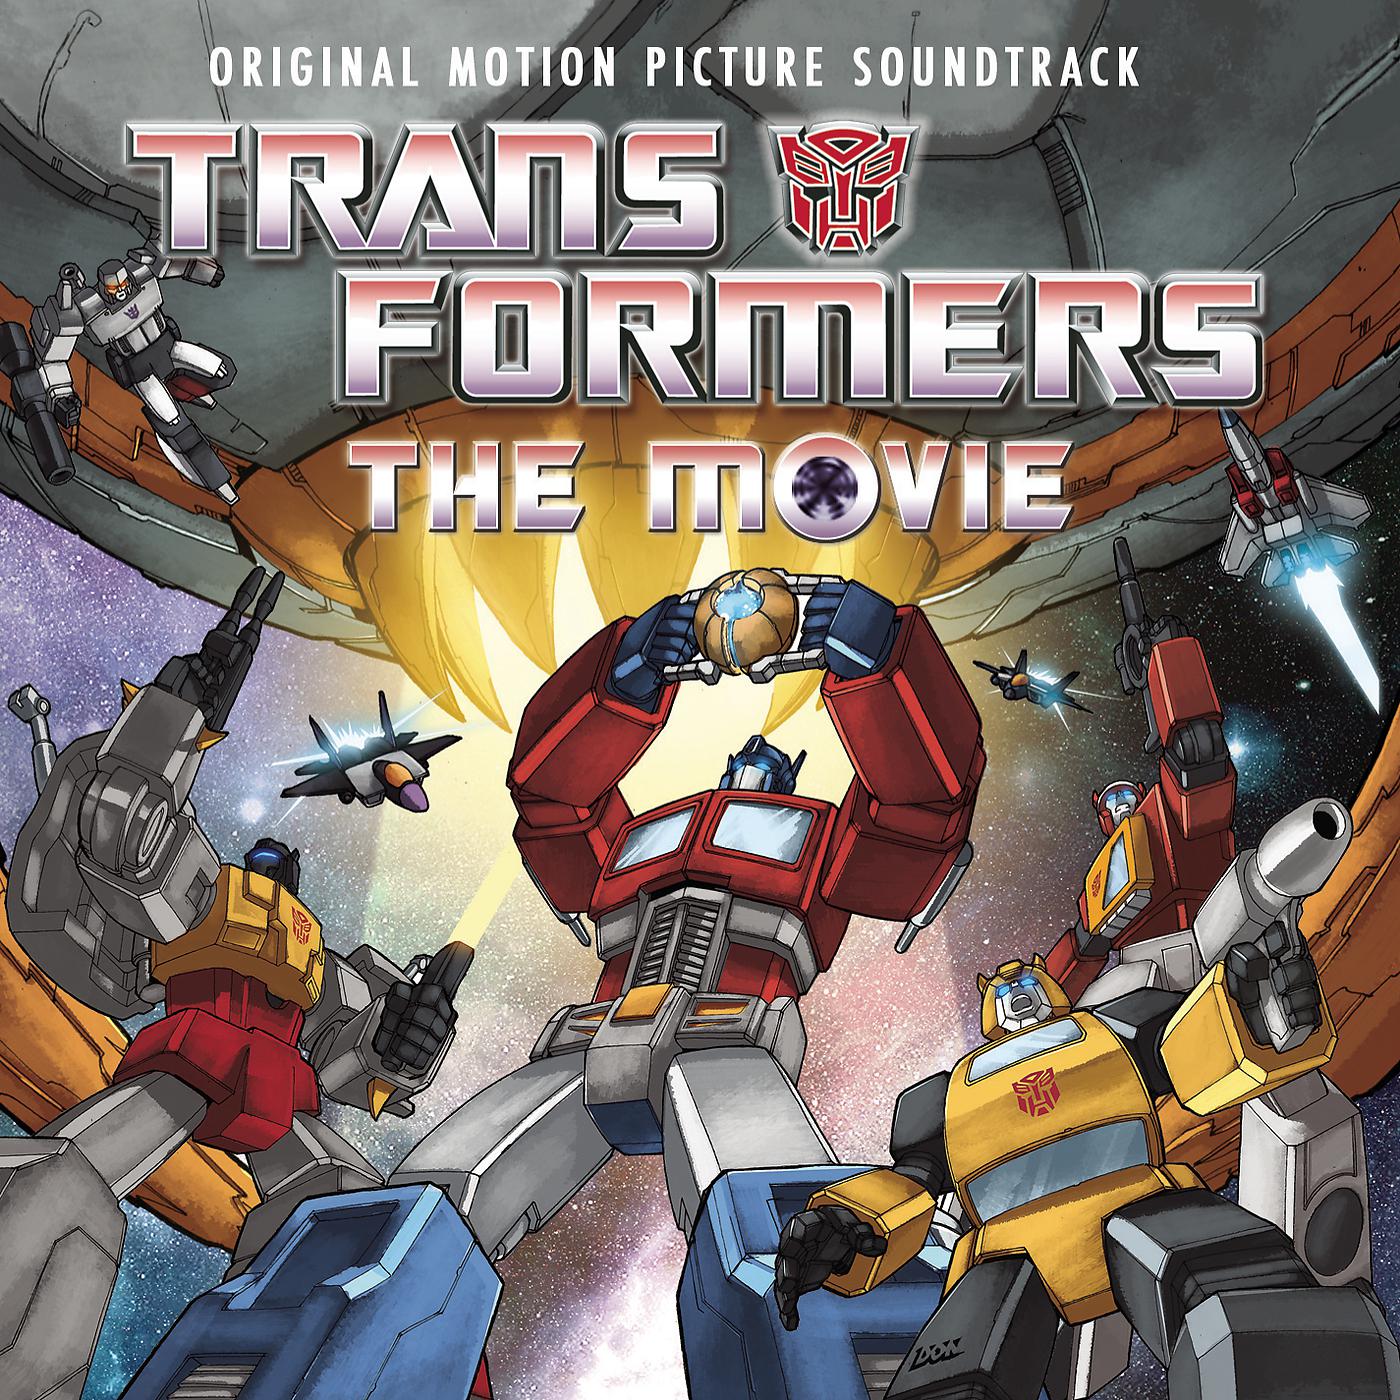 Ost transformers. Transformers 1986. OST трансформеры. Transformers the movie 1986. Винс ДИКОЛА трансформеры.